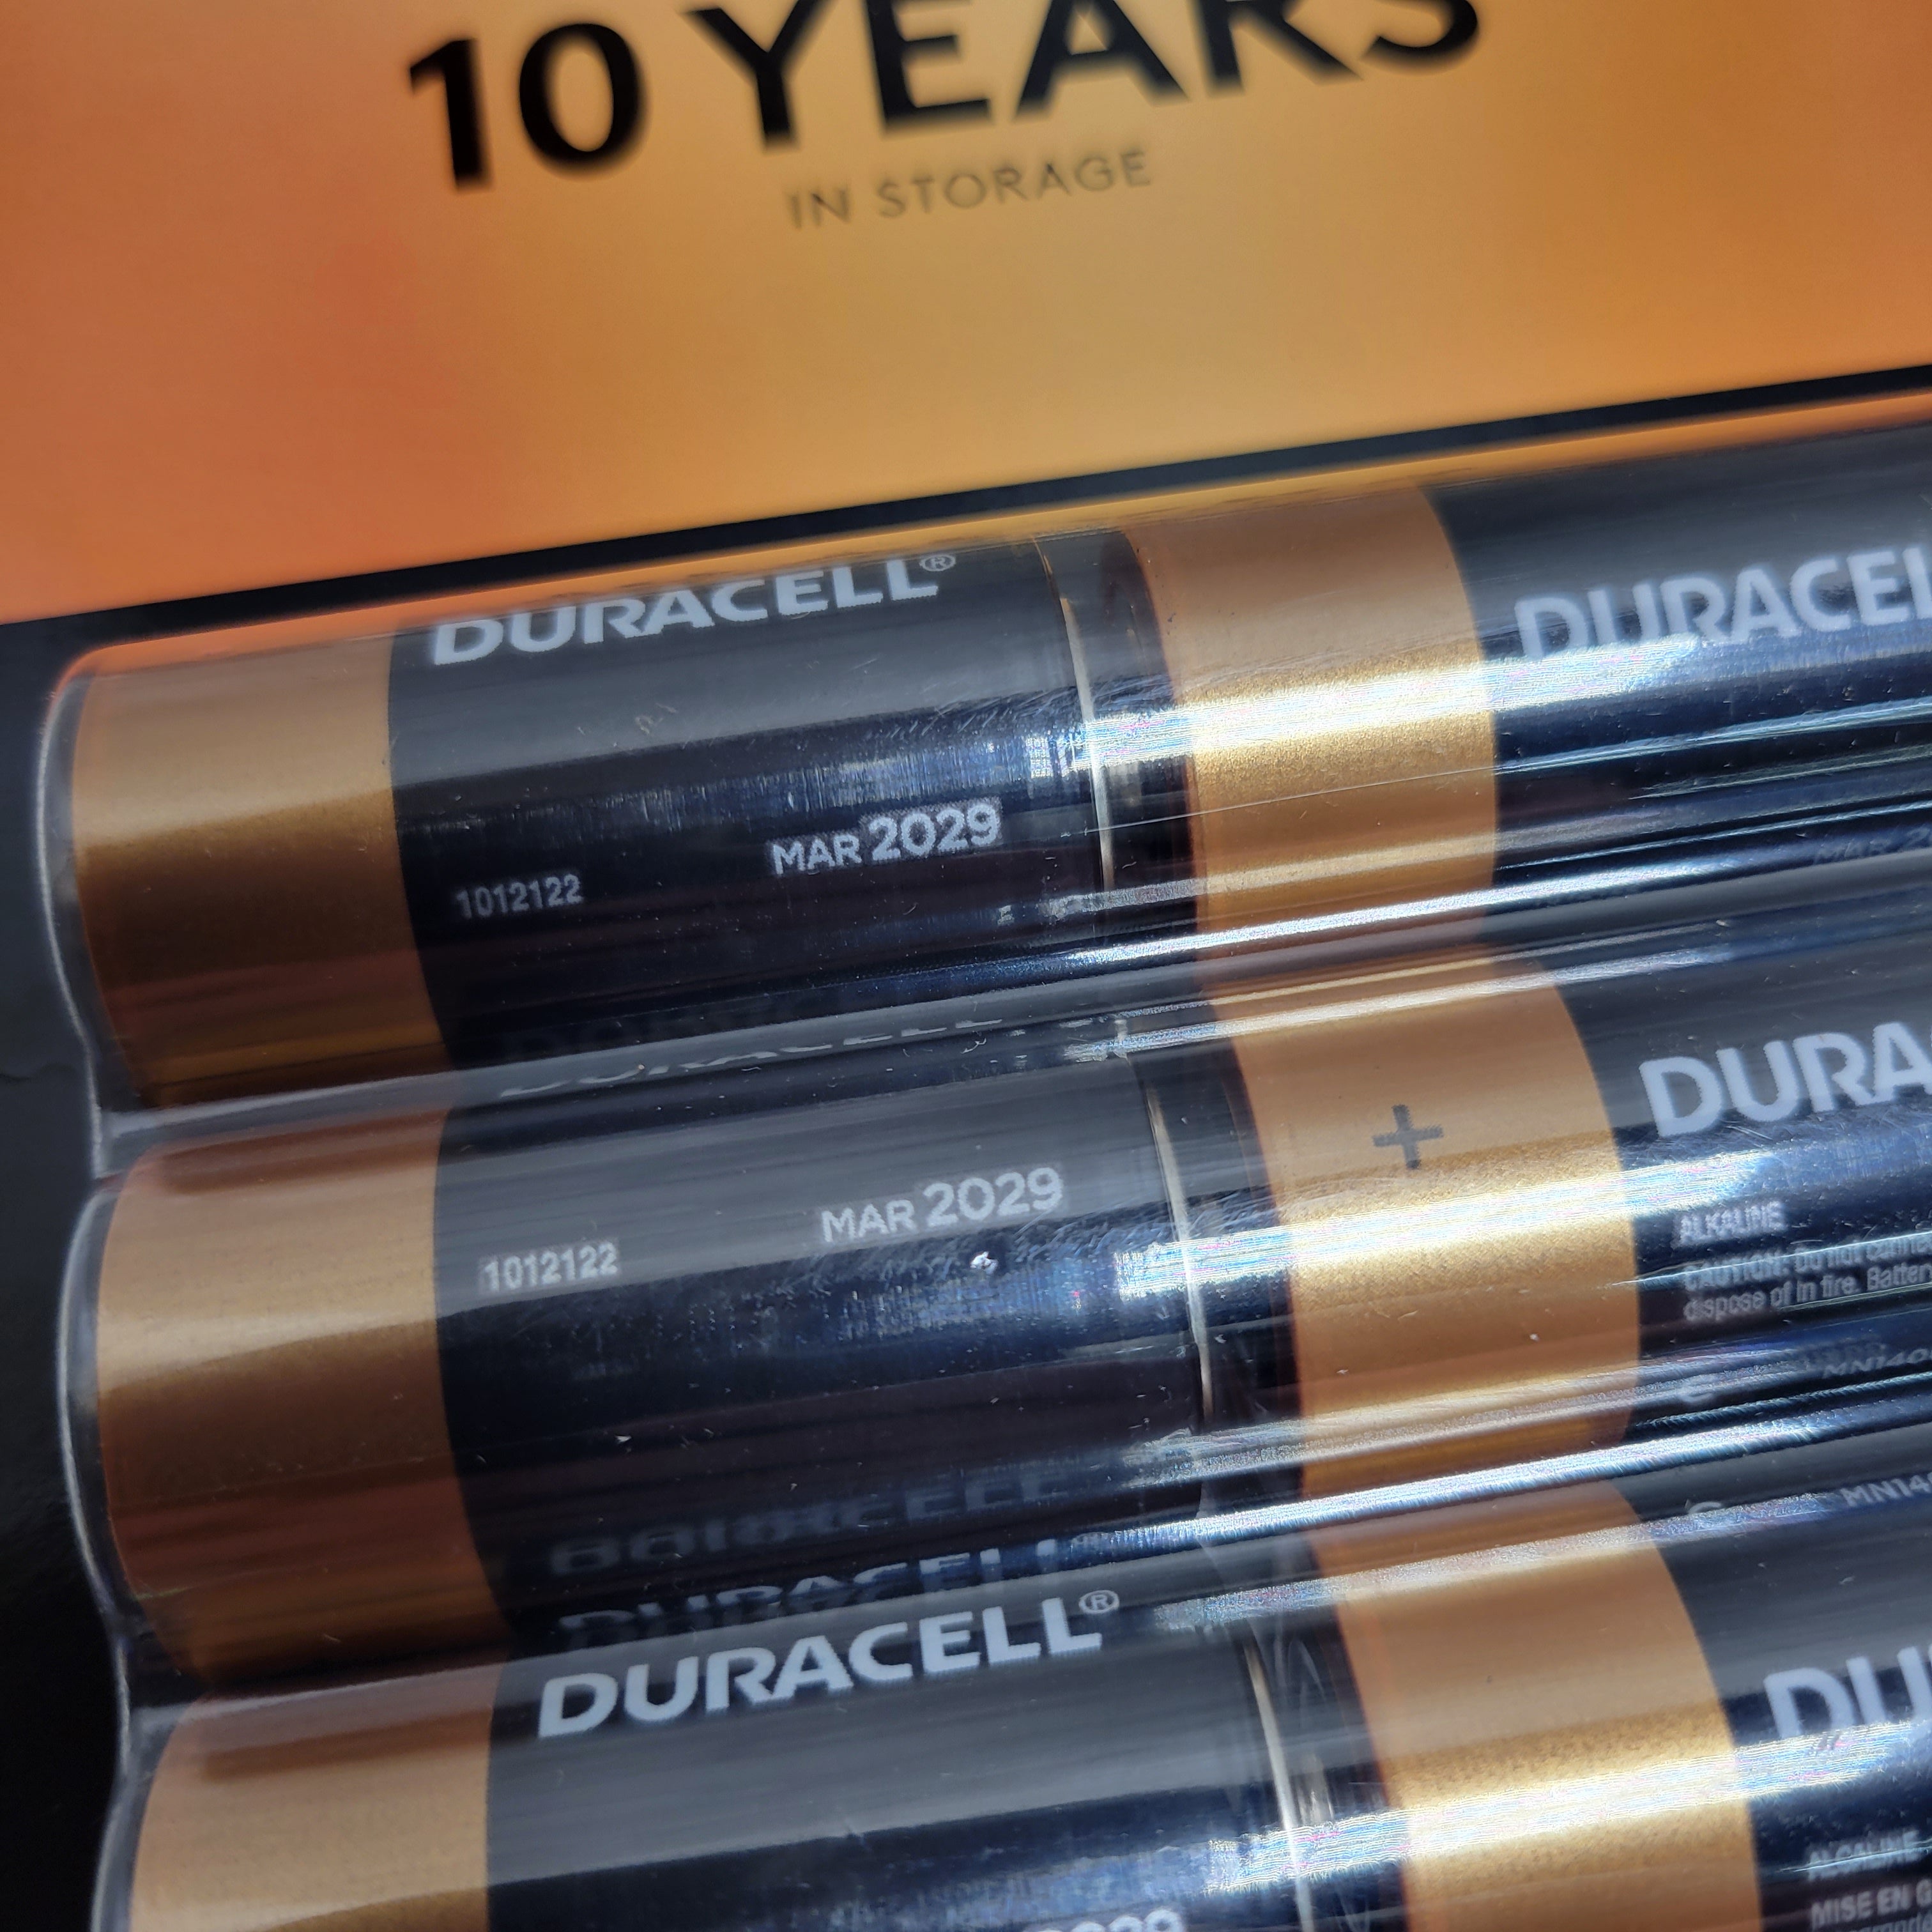 DURACELL 80240709 Coppertop Alkaline Batteries C - Exp. 3/2029, 10 pk, Lot of 2 (8133090181358)